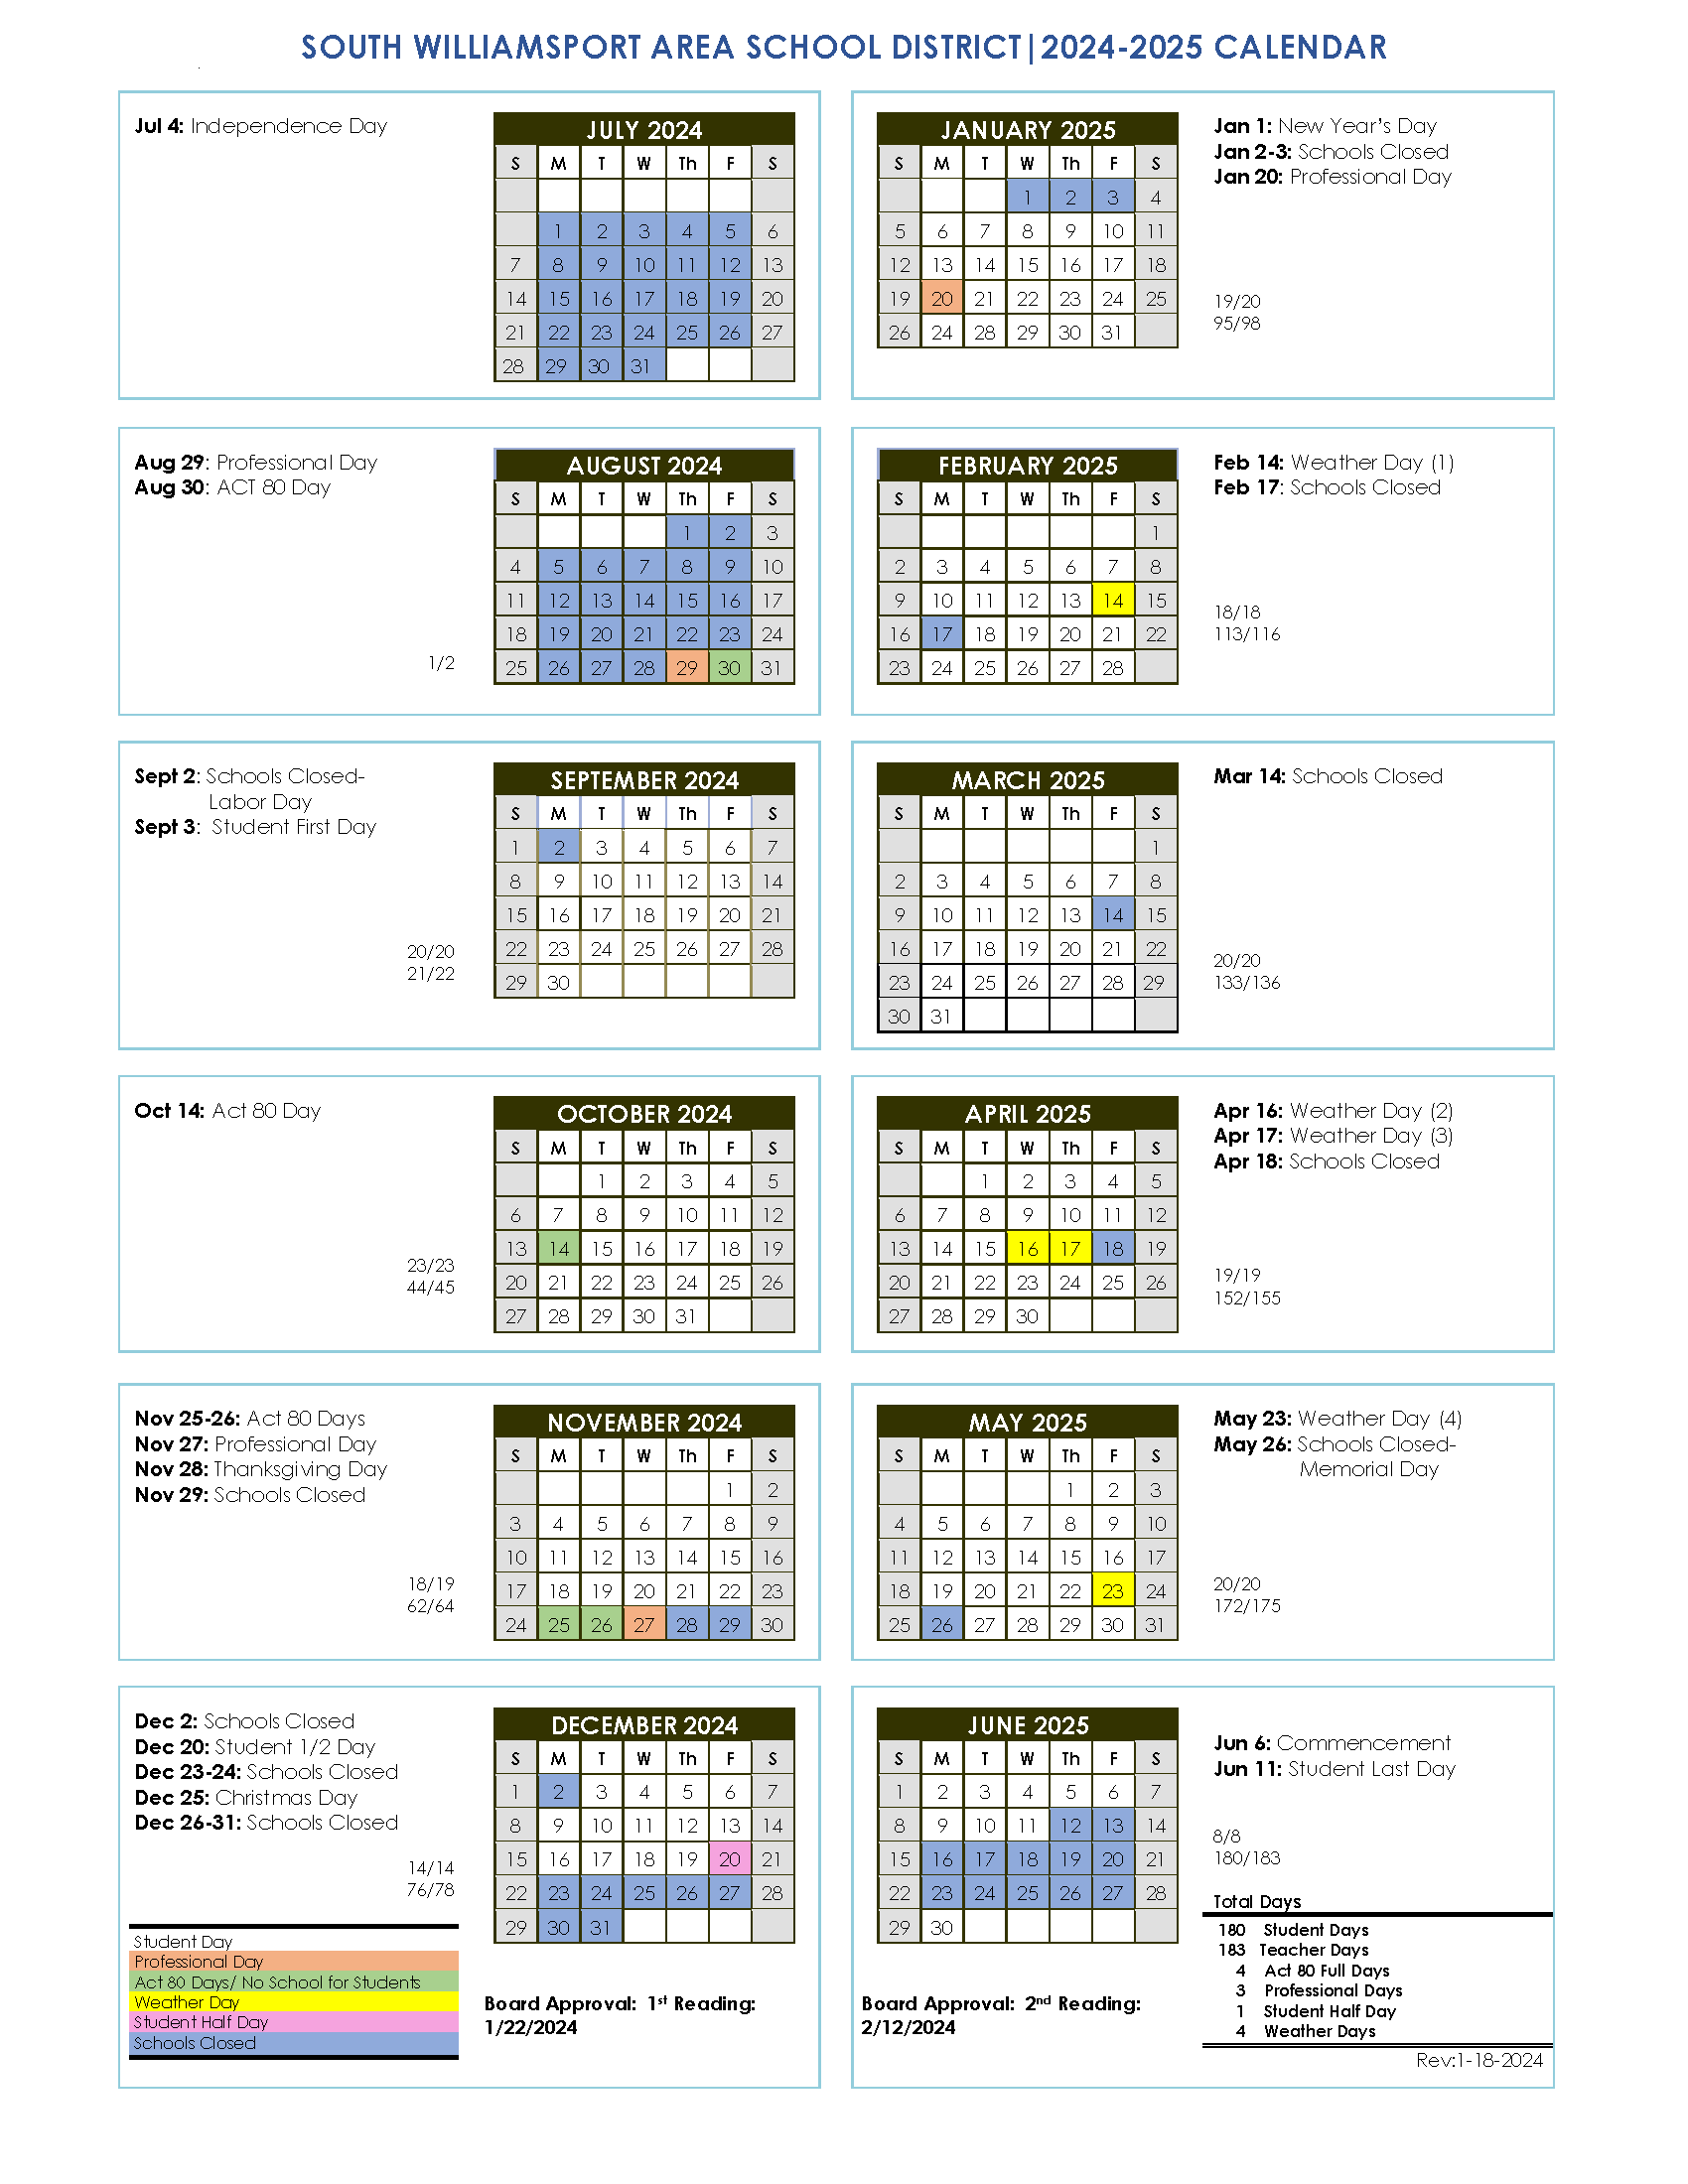 District Calendars South Williamsport Area School District